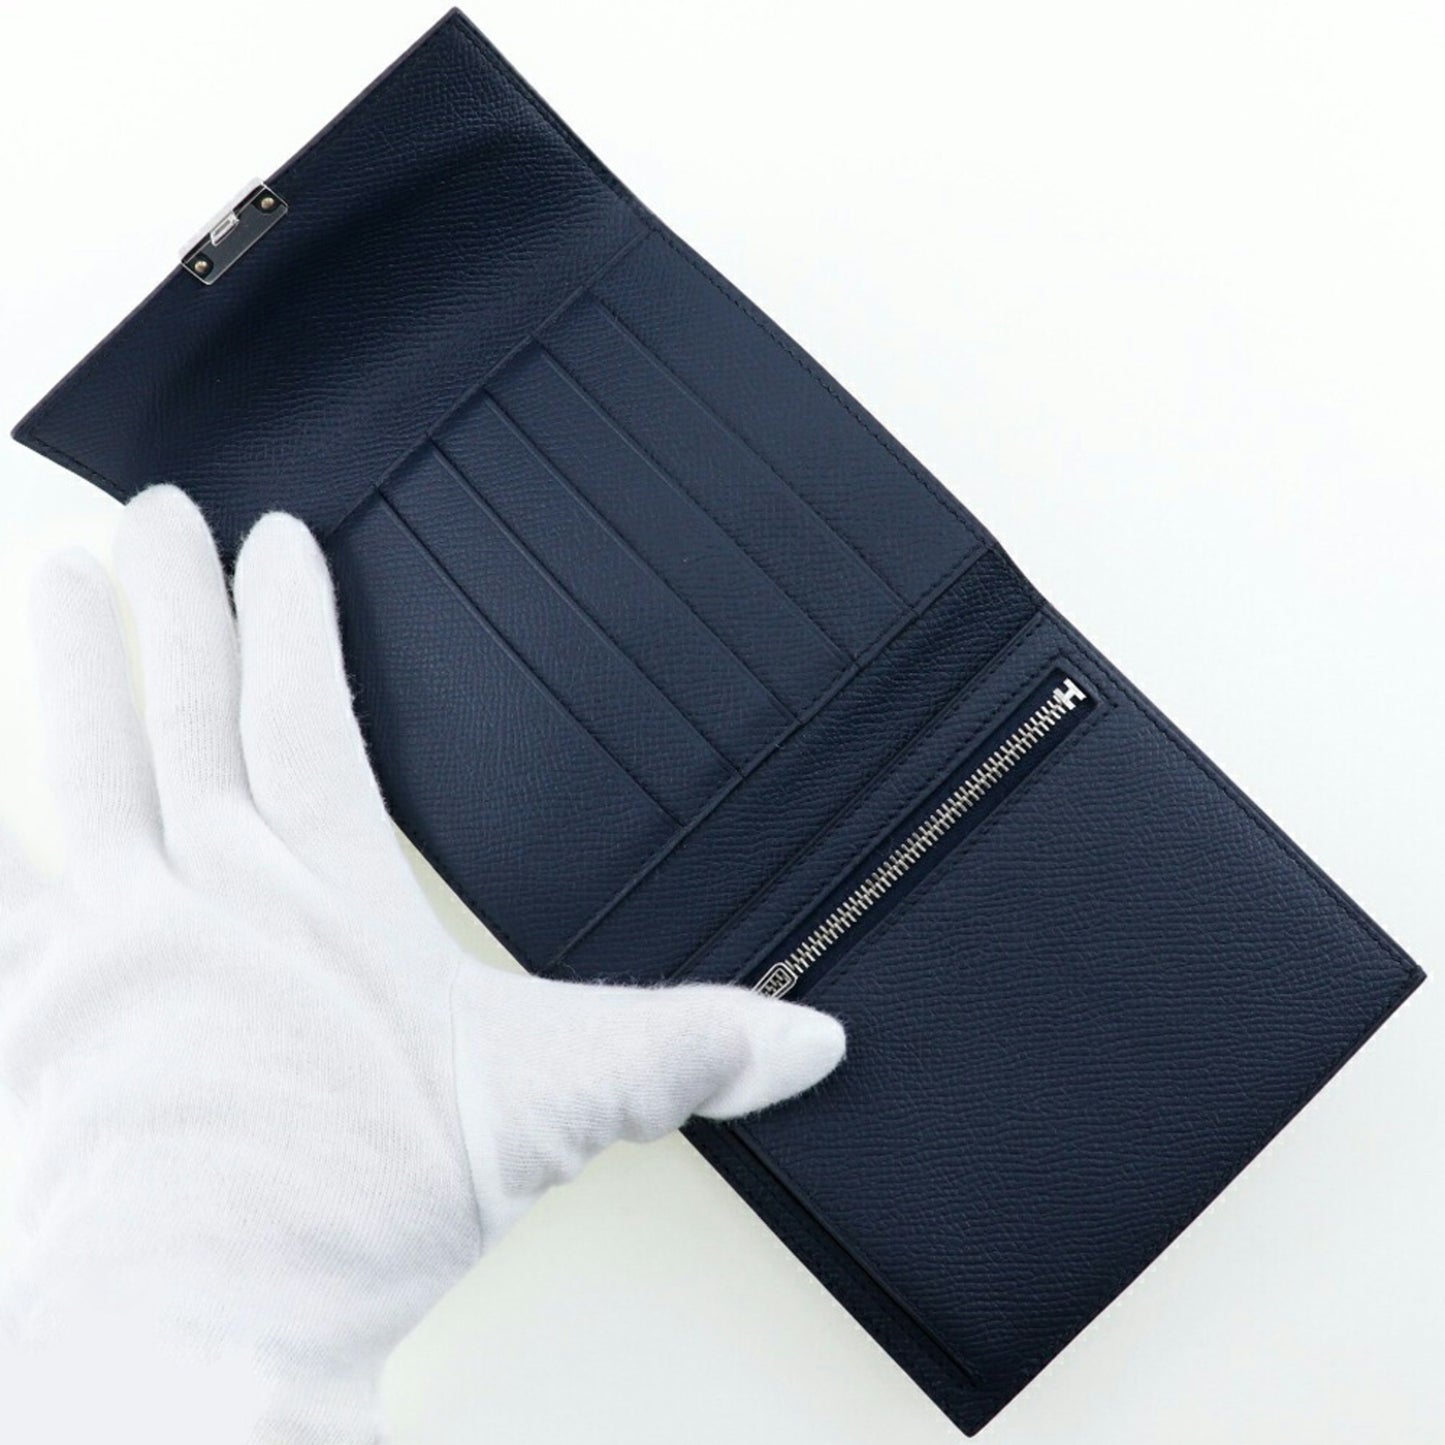 Hermes Unisex Captivating Black Leather Wallet - Excellent Condition in Black